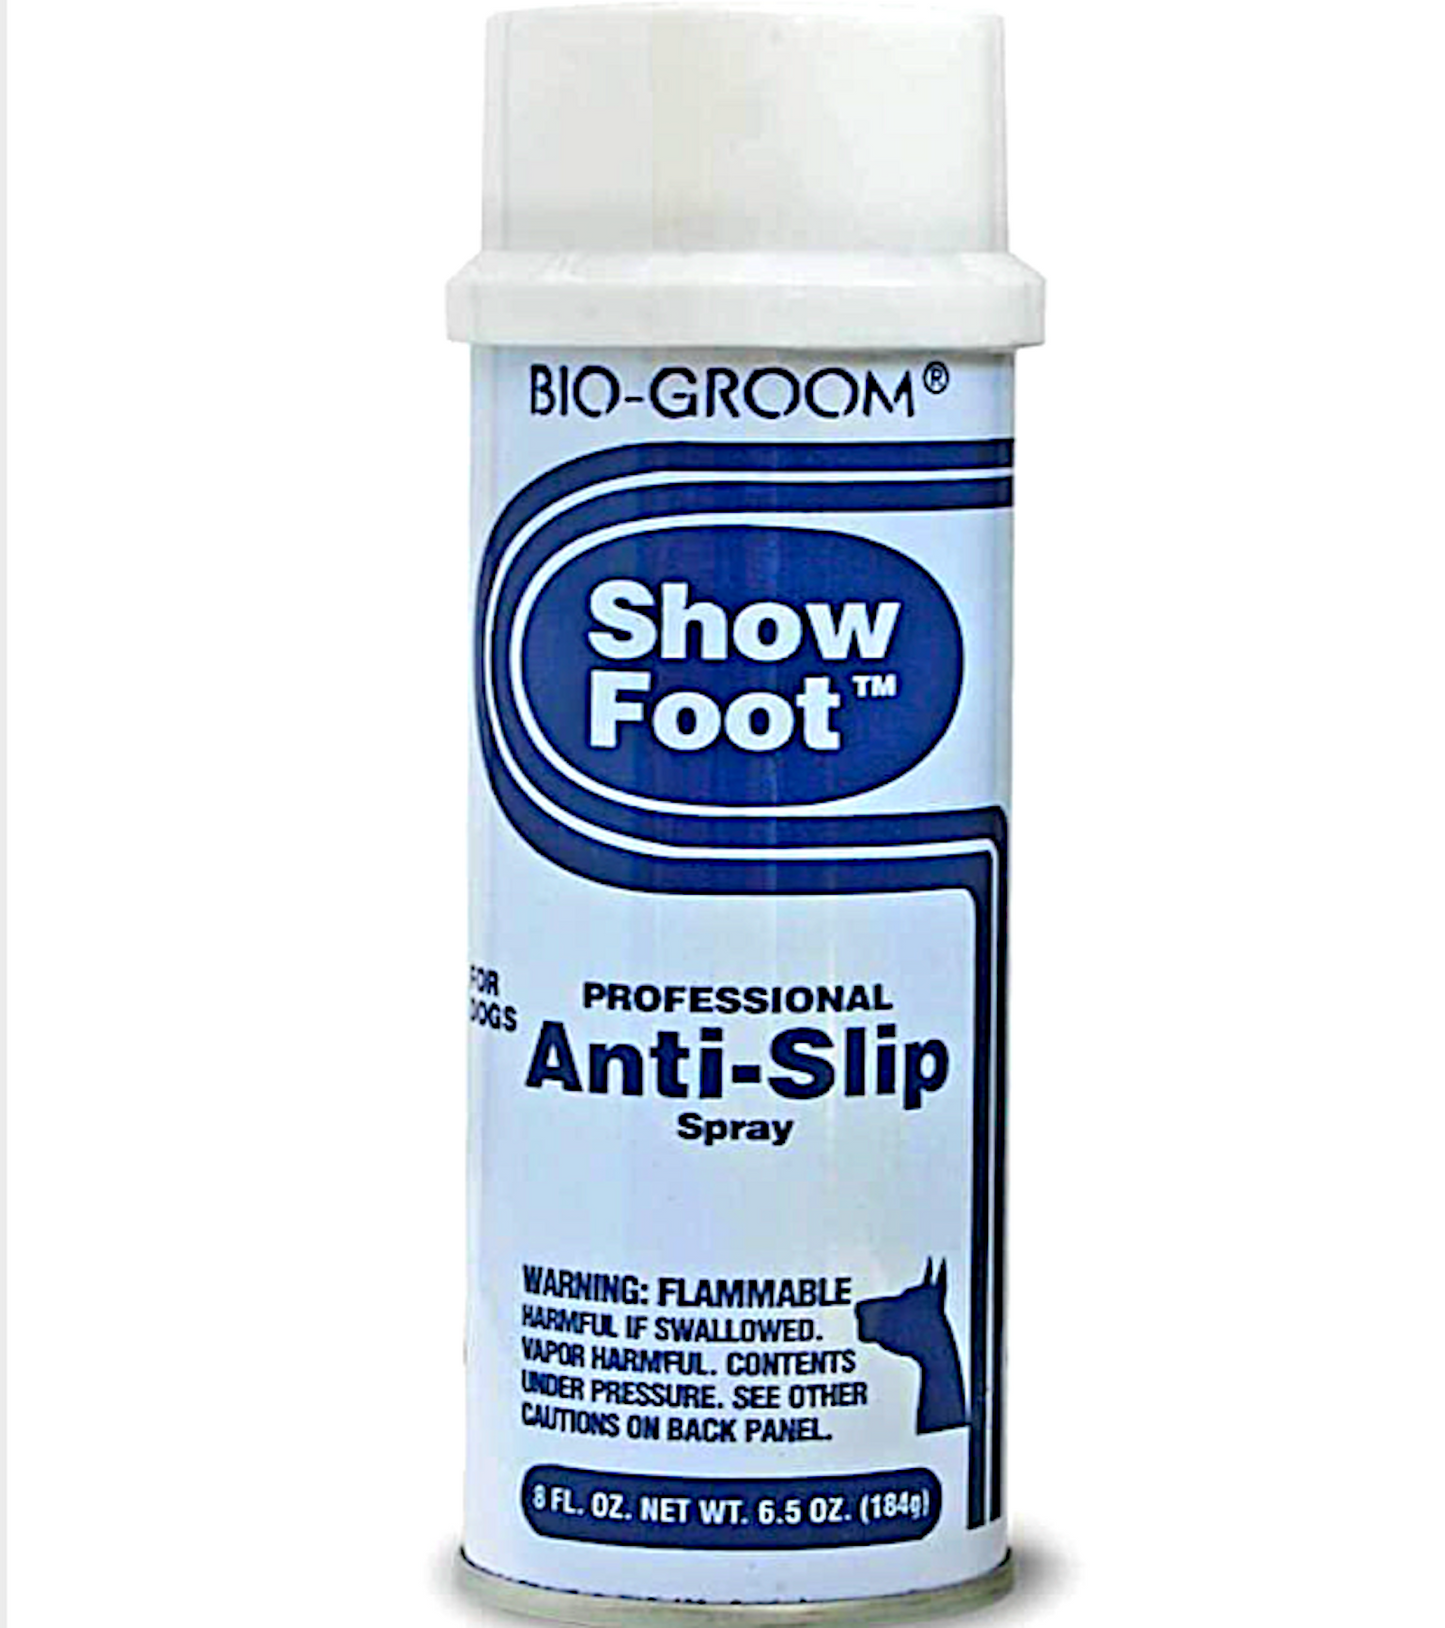 SHOW FOOT ANTI-SLIP SPRAY